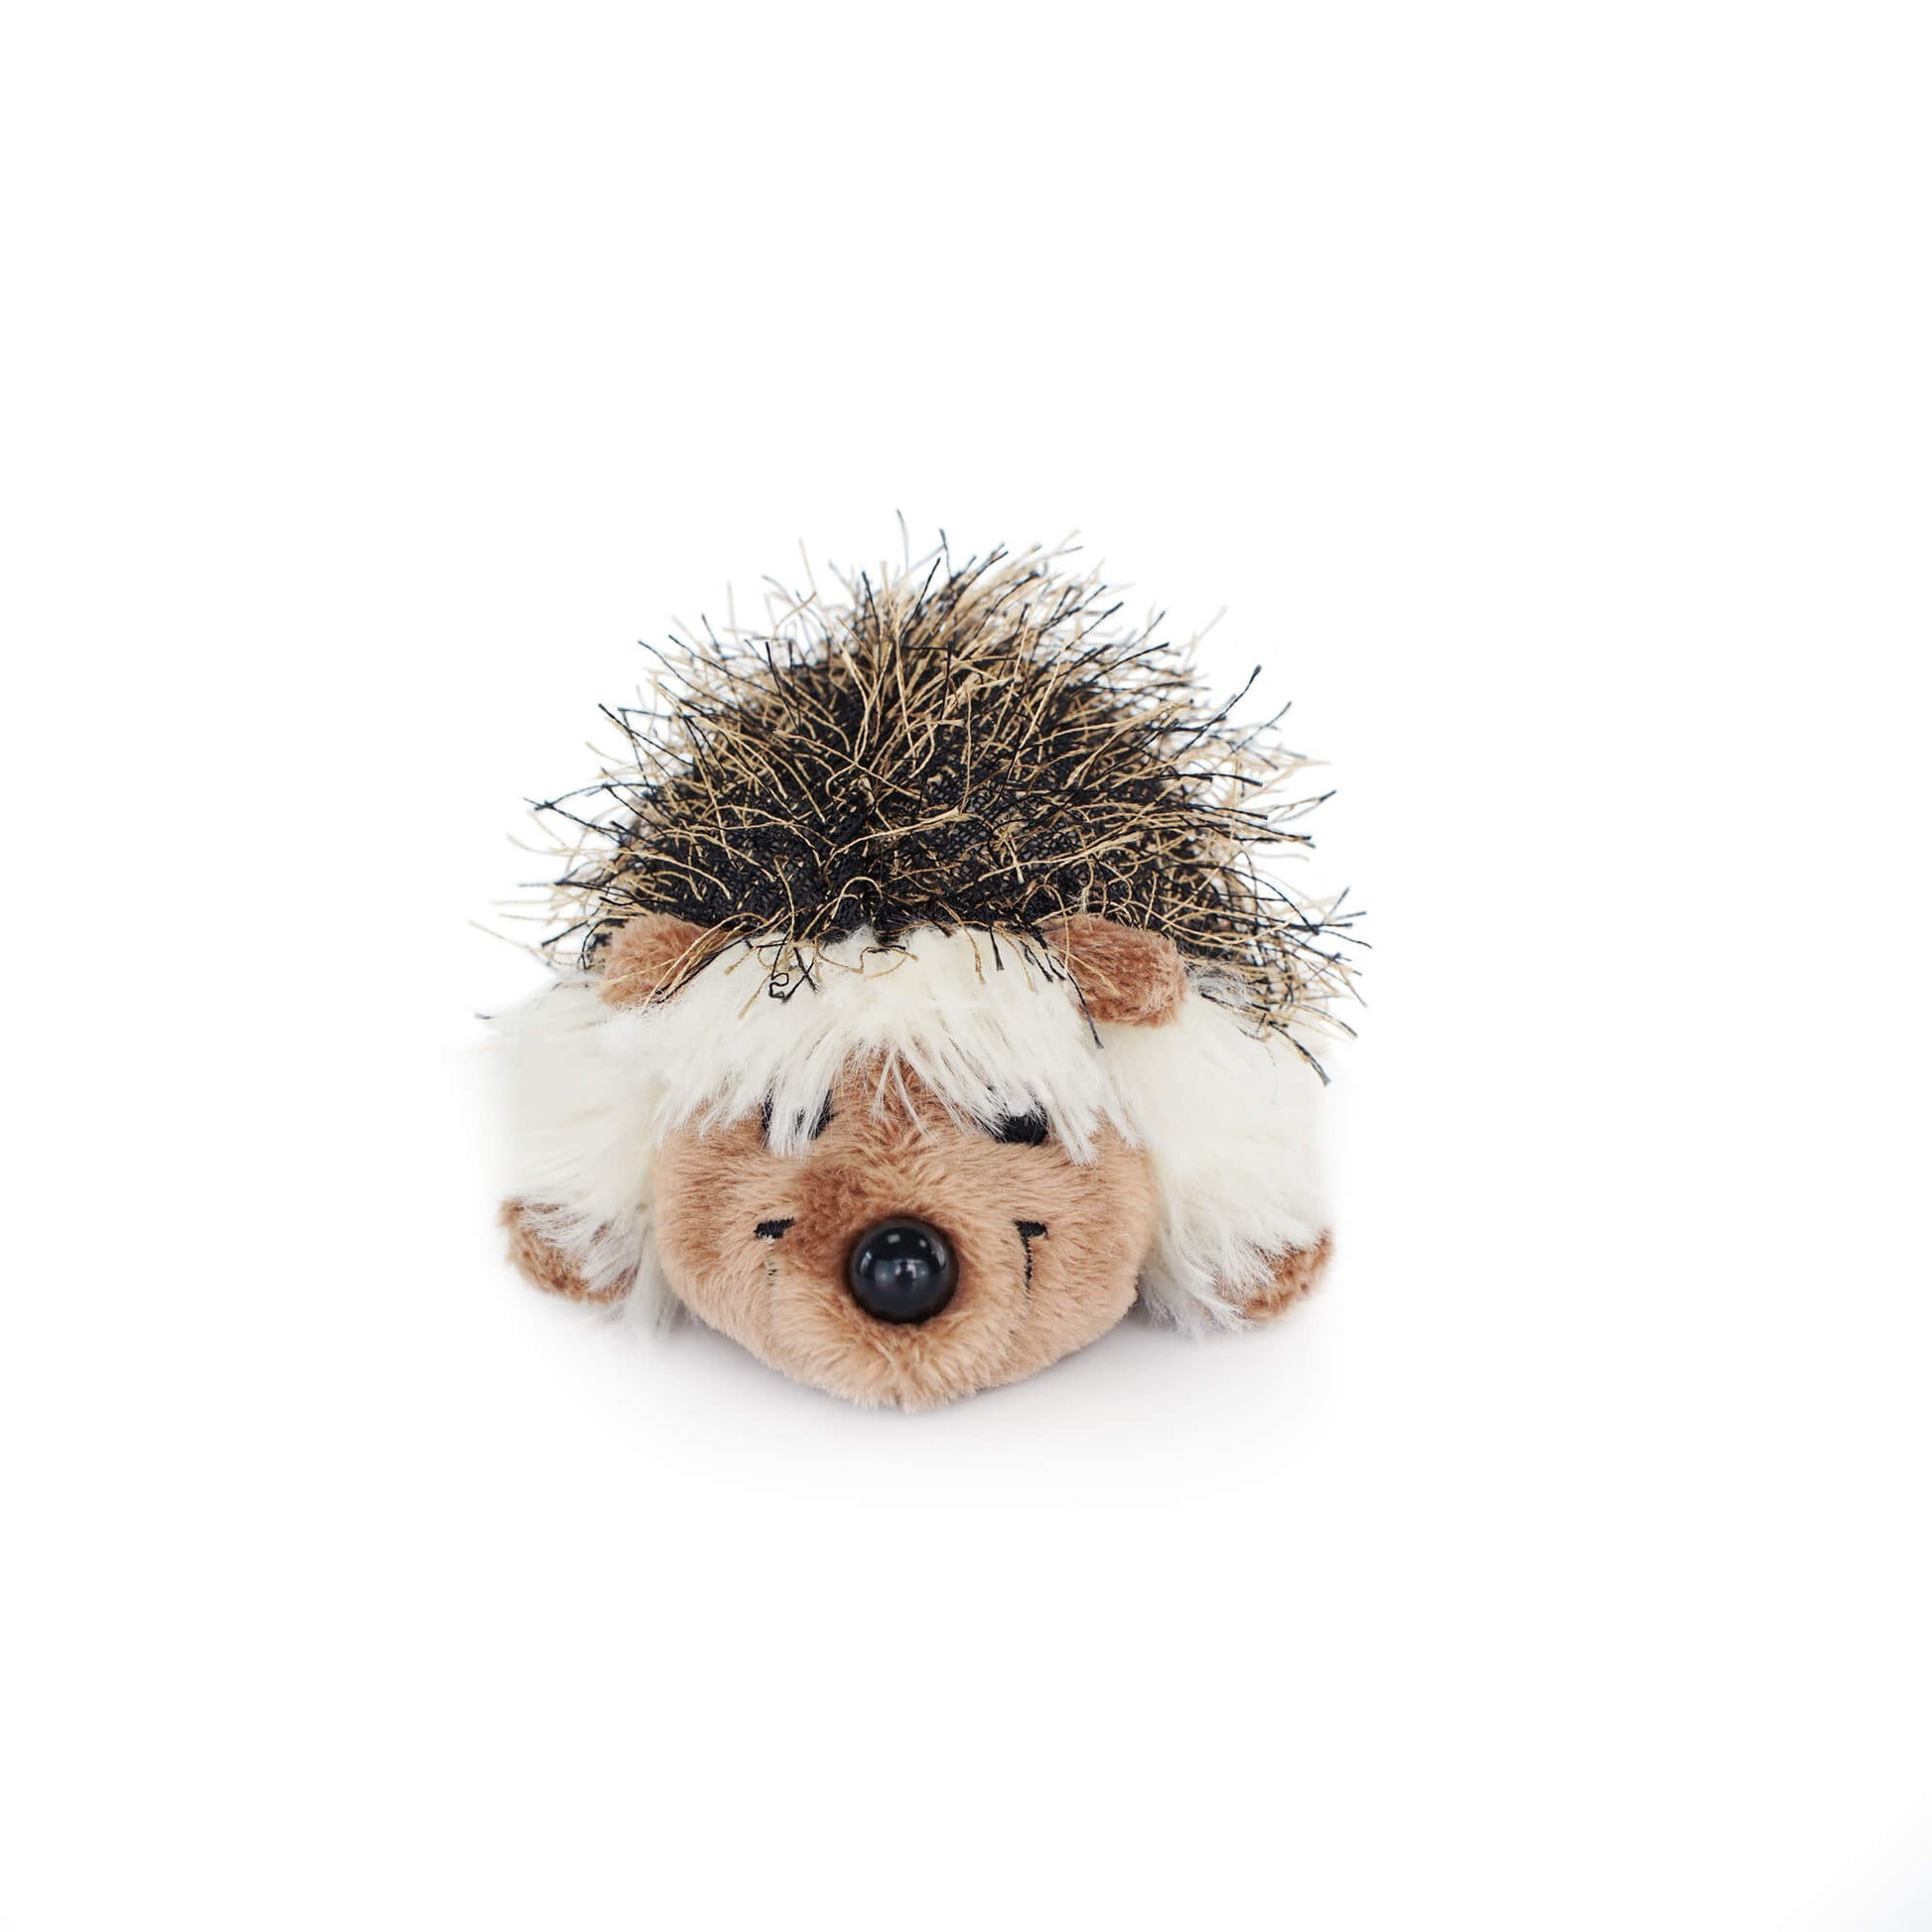 Small wood color hedgehog stuffed animal PlushThis